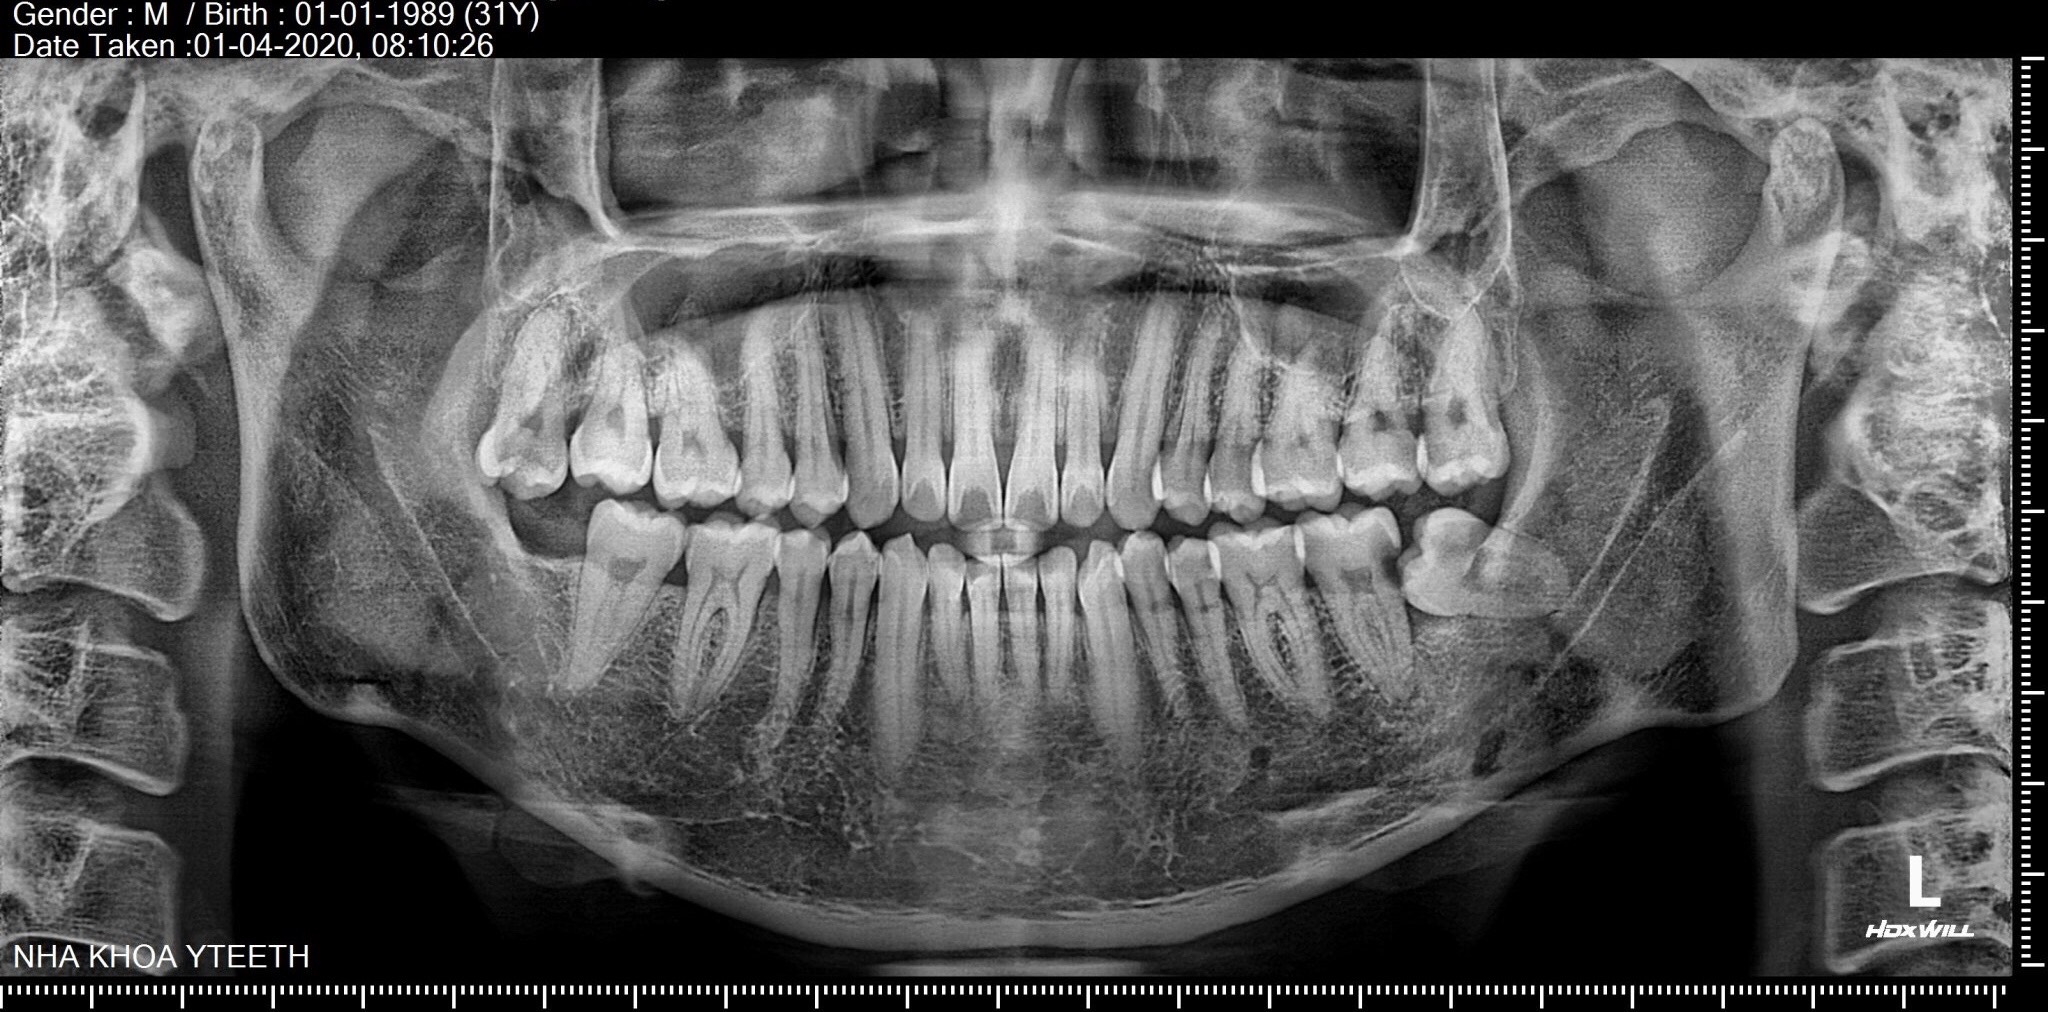 Răng số 8 - Nha khoa Yteeth